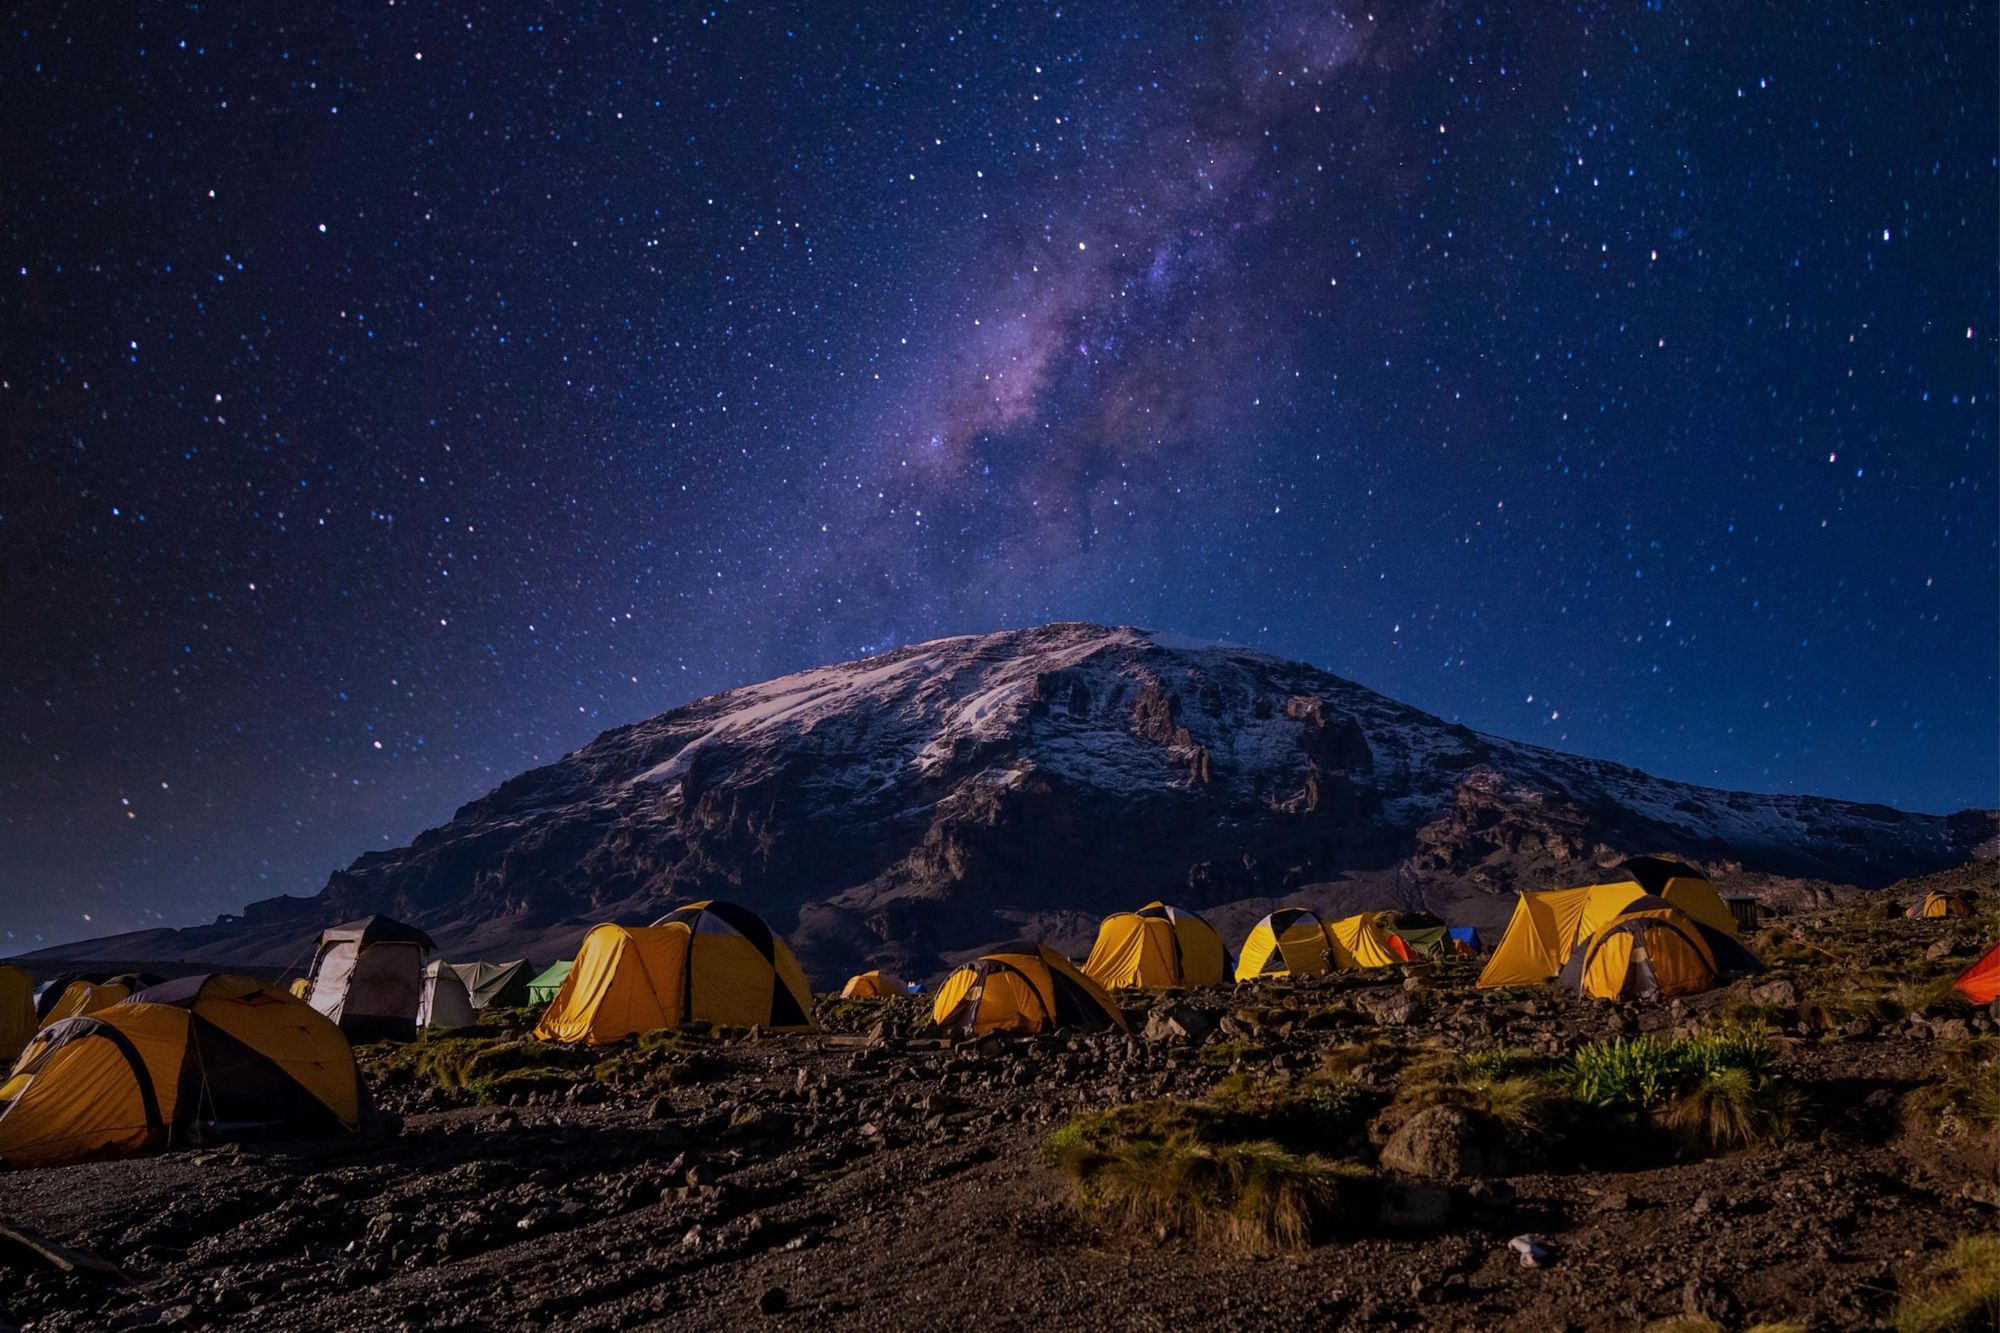 Camping on Kilimanjaro under the Milky Way